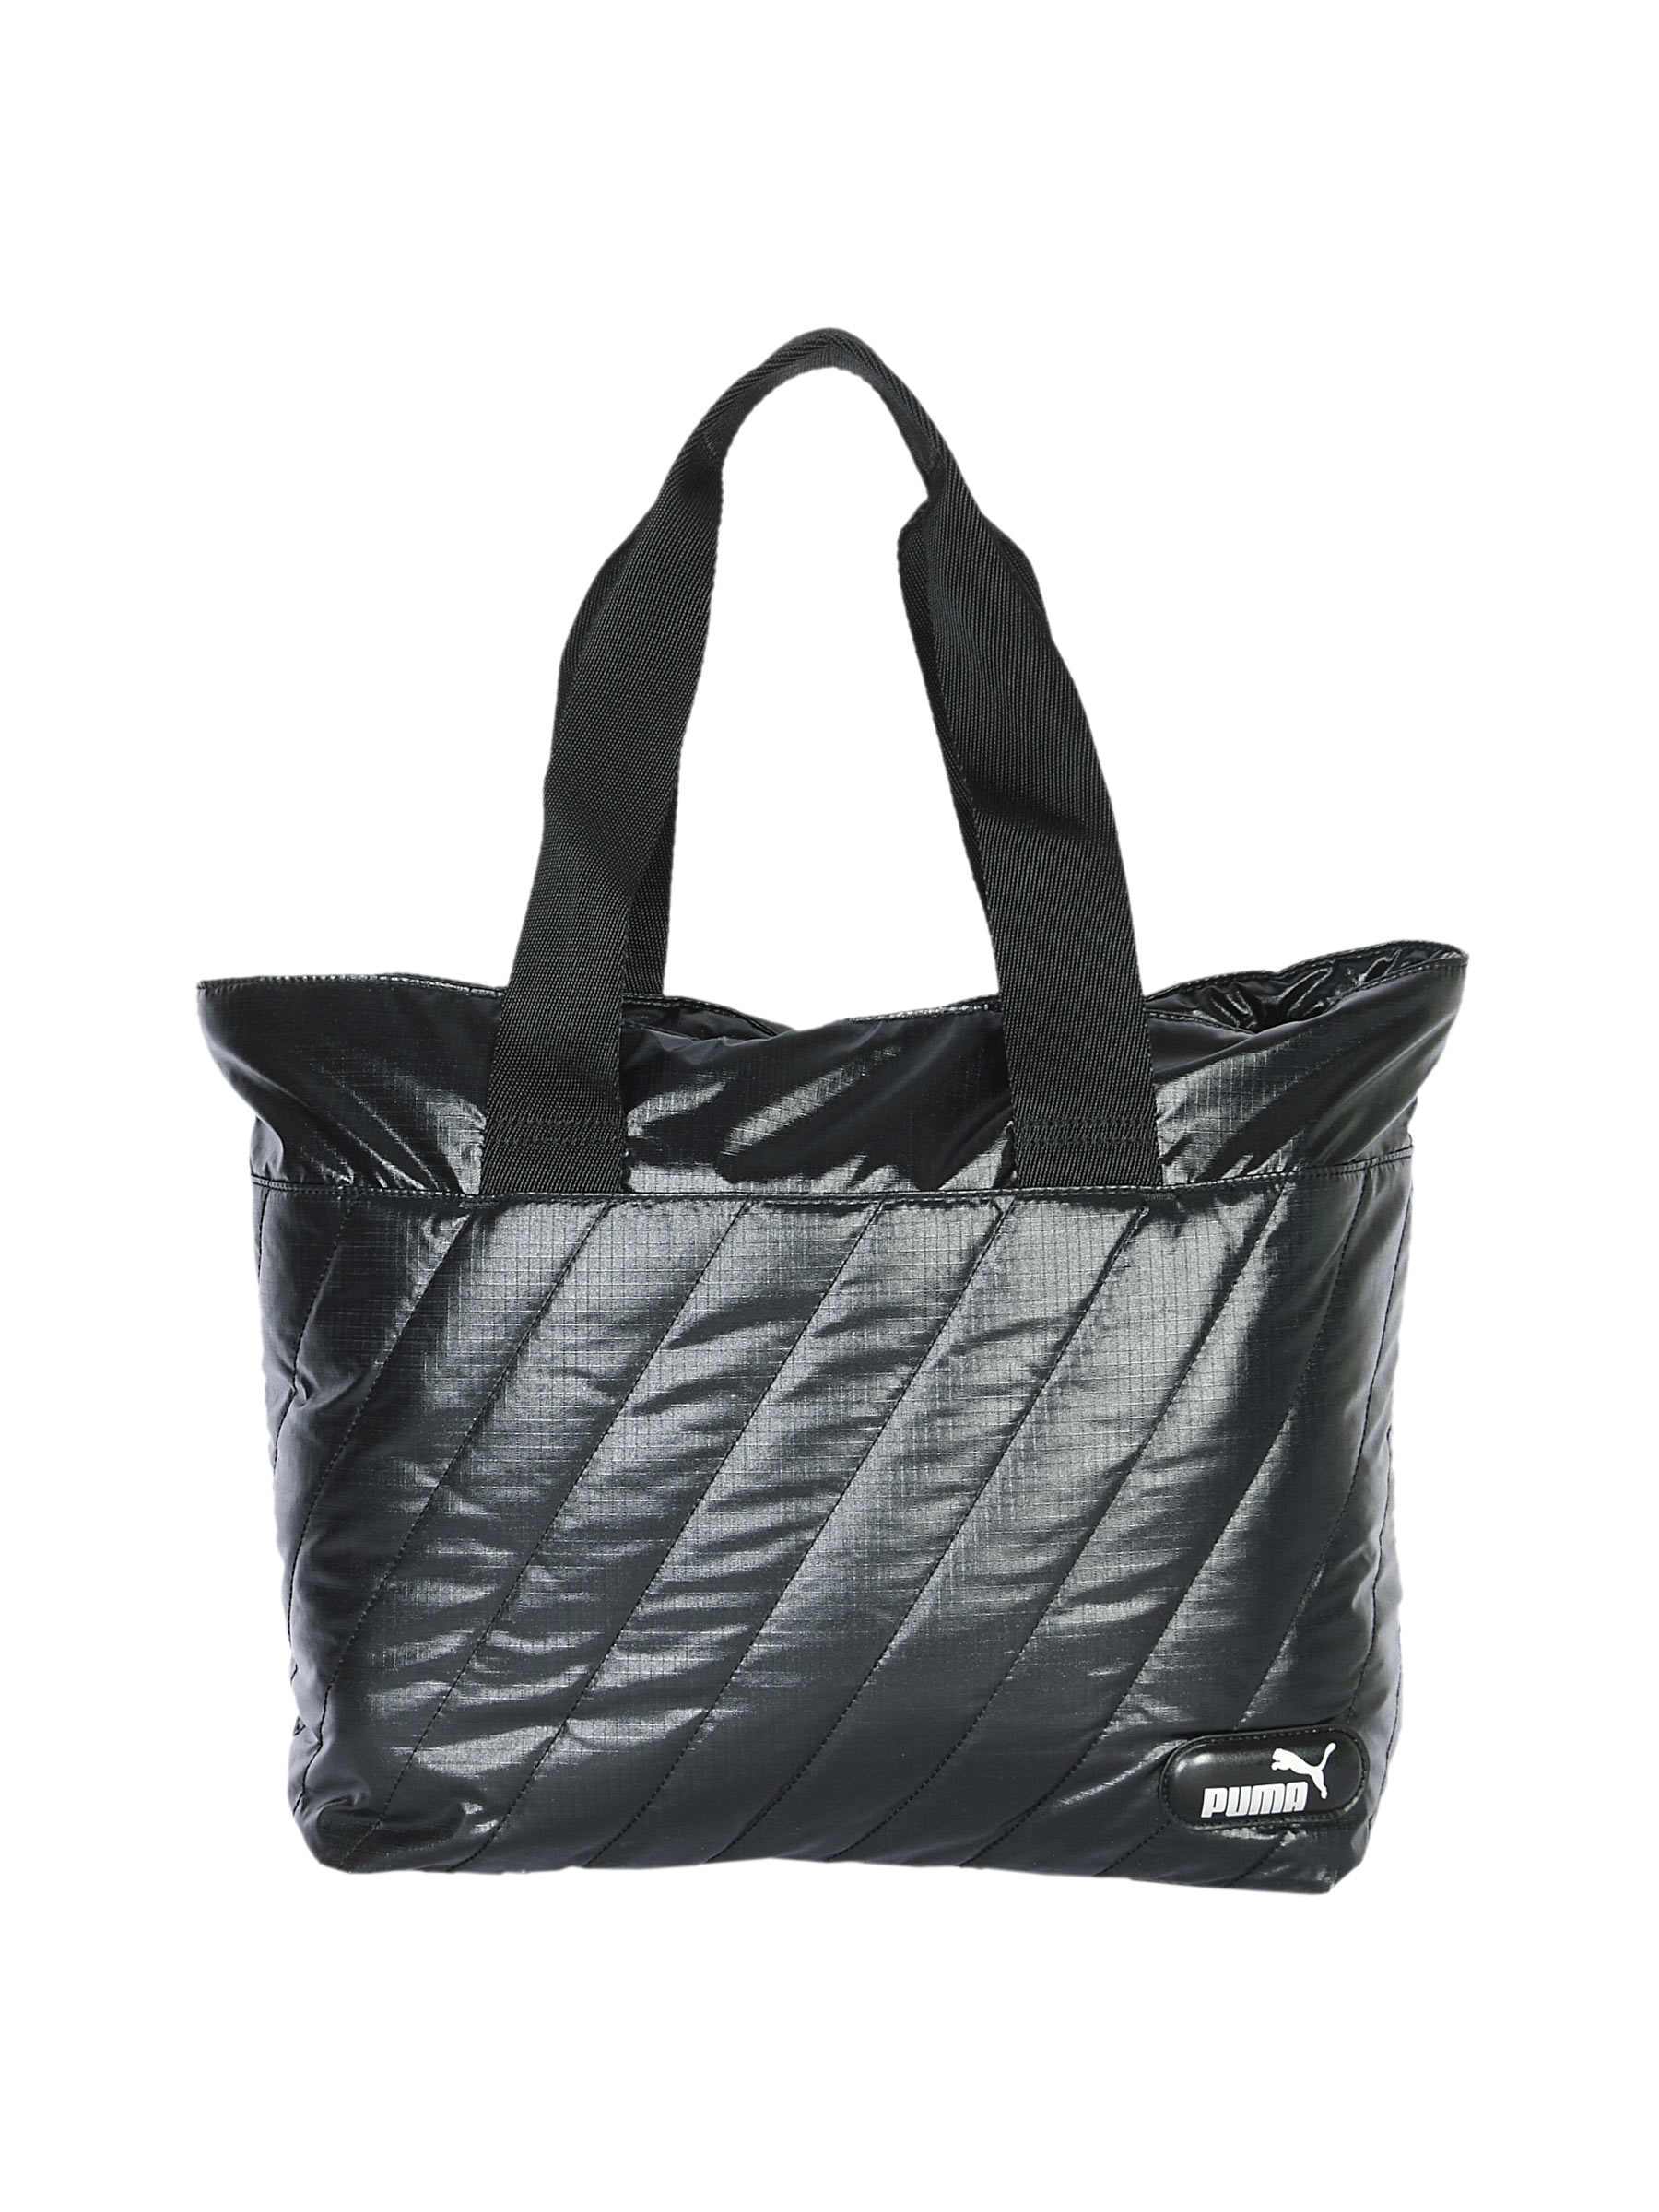 Puma Unisex Dizzy Shopper Black Bags